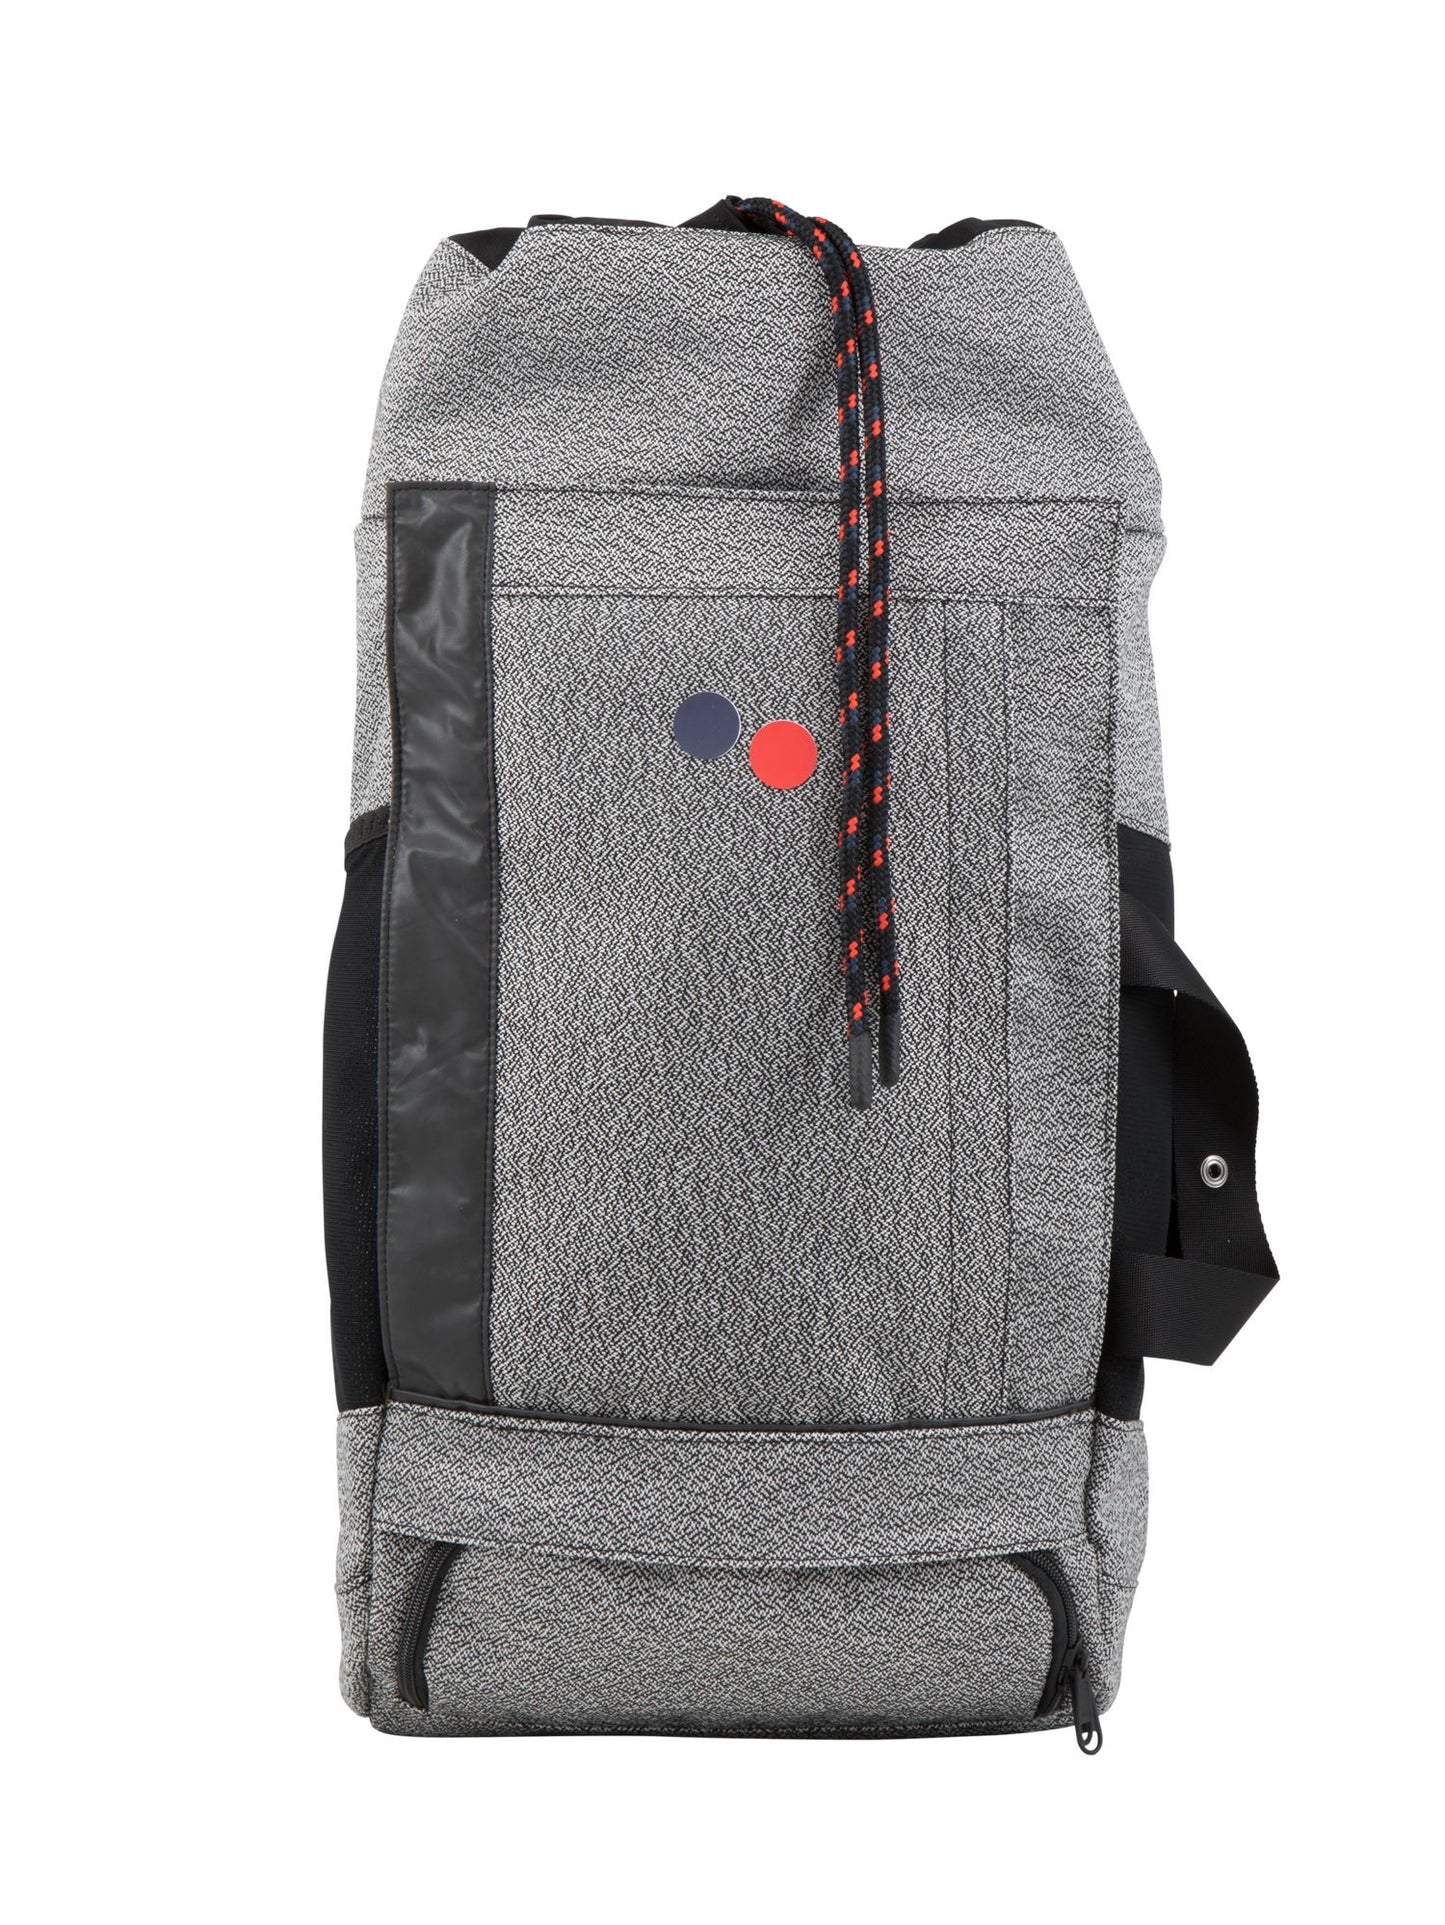 pinqponq-backpack-Blok-Large-Vivid-Monochrome-front